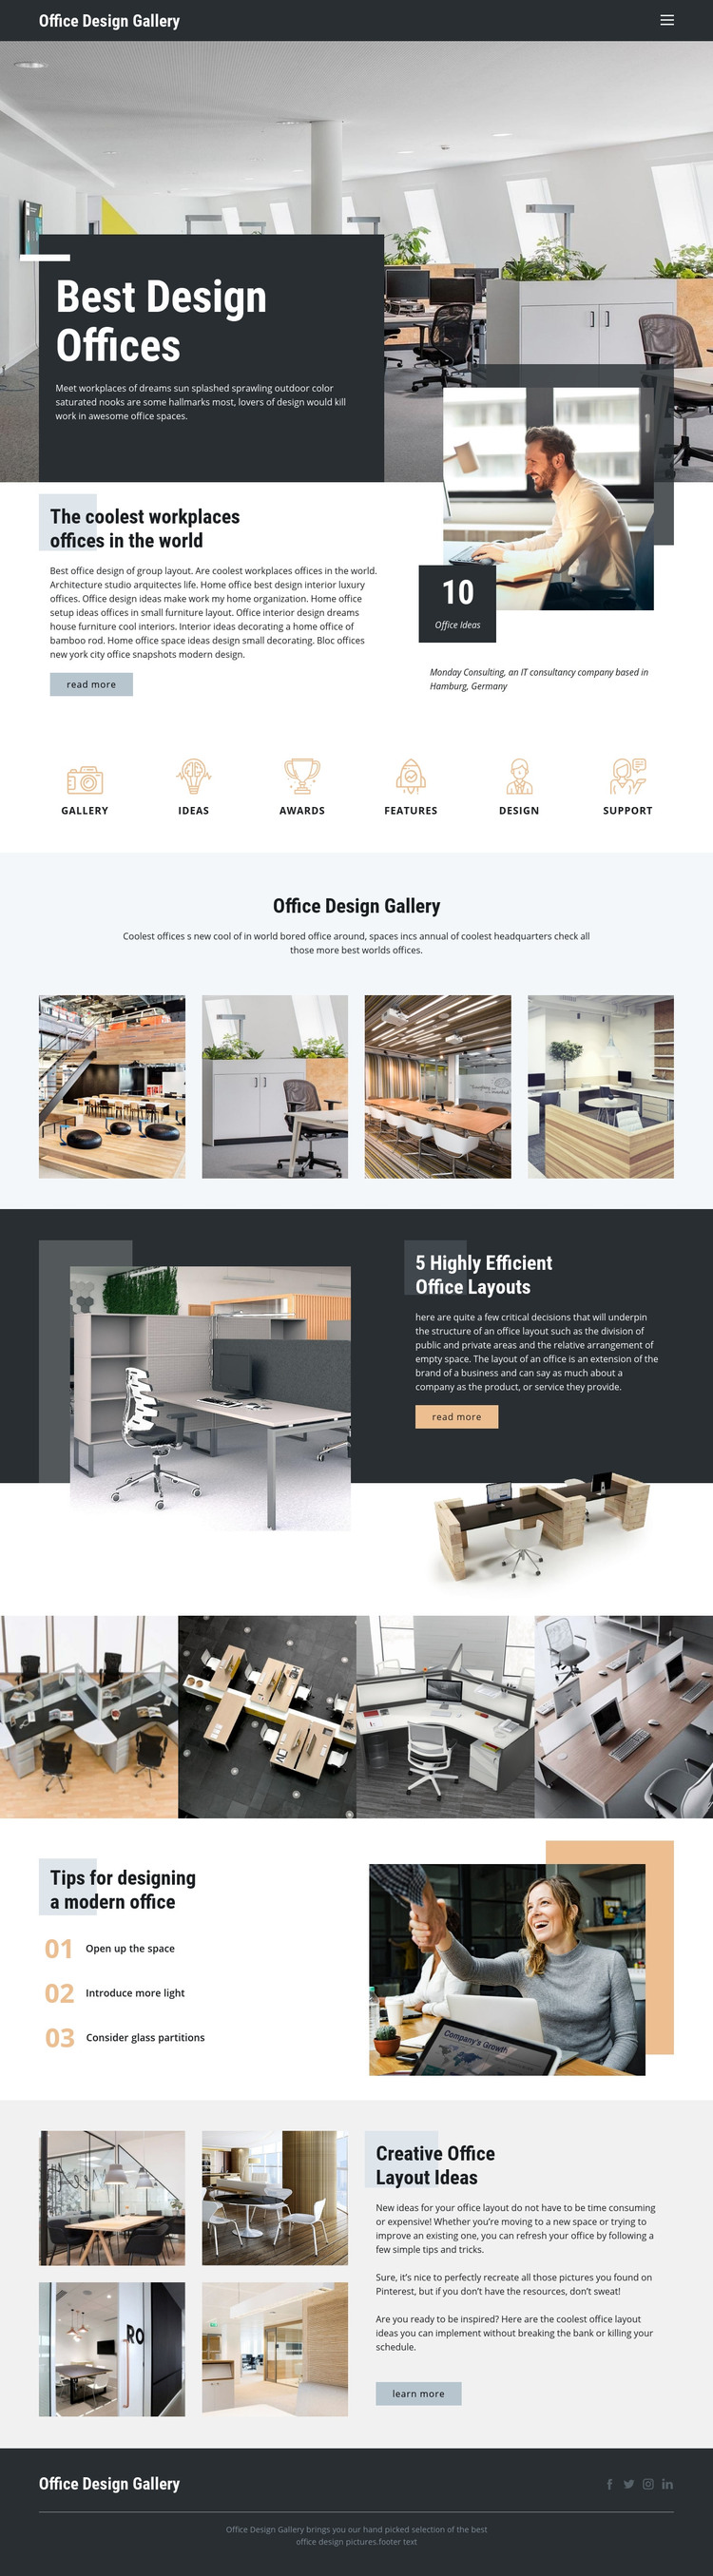 Best Design Offices Homepage Design